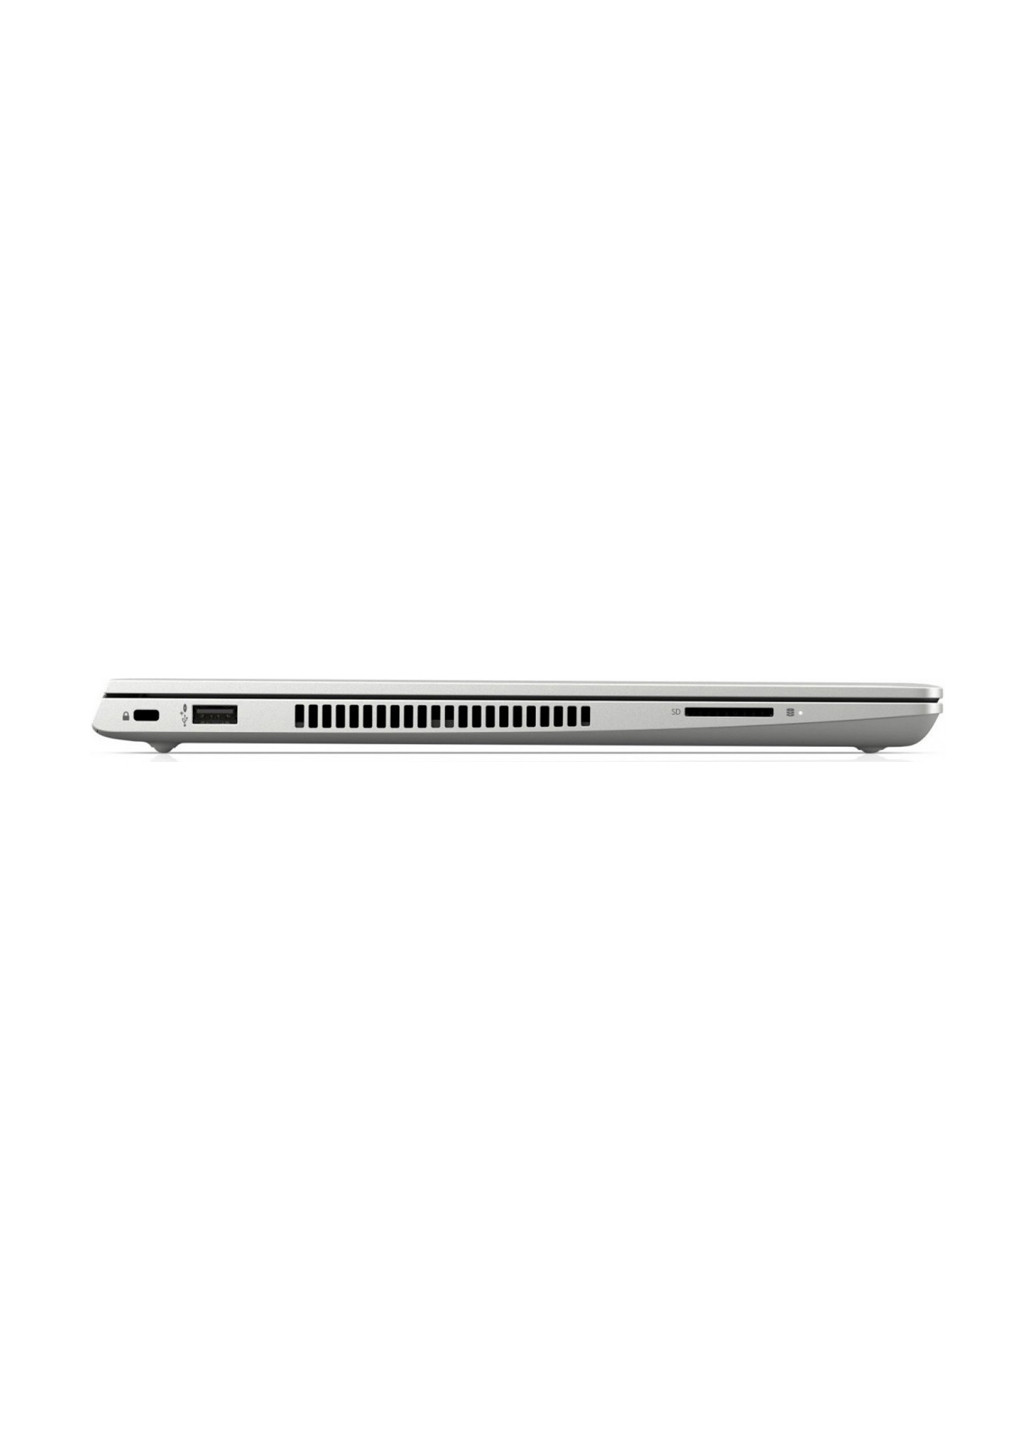 Ноутбук HP probook 440 g6 (4rz50av_v41) silver (173921891)